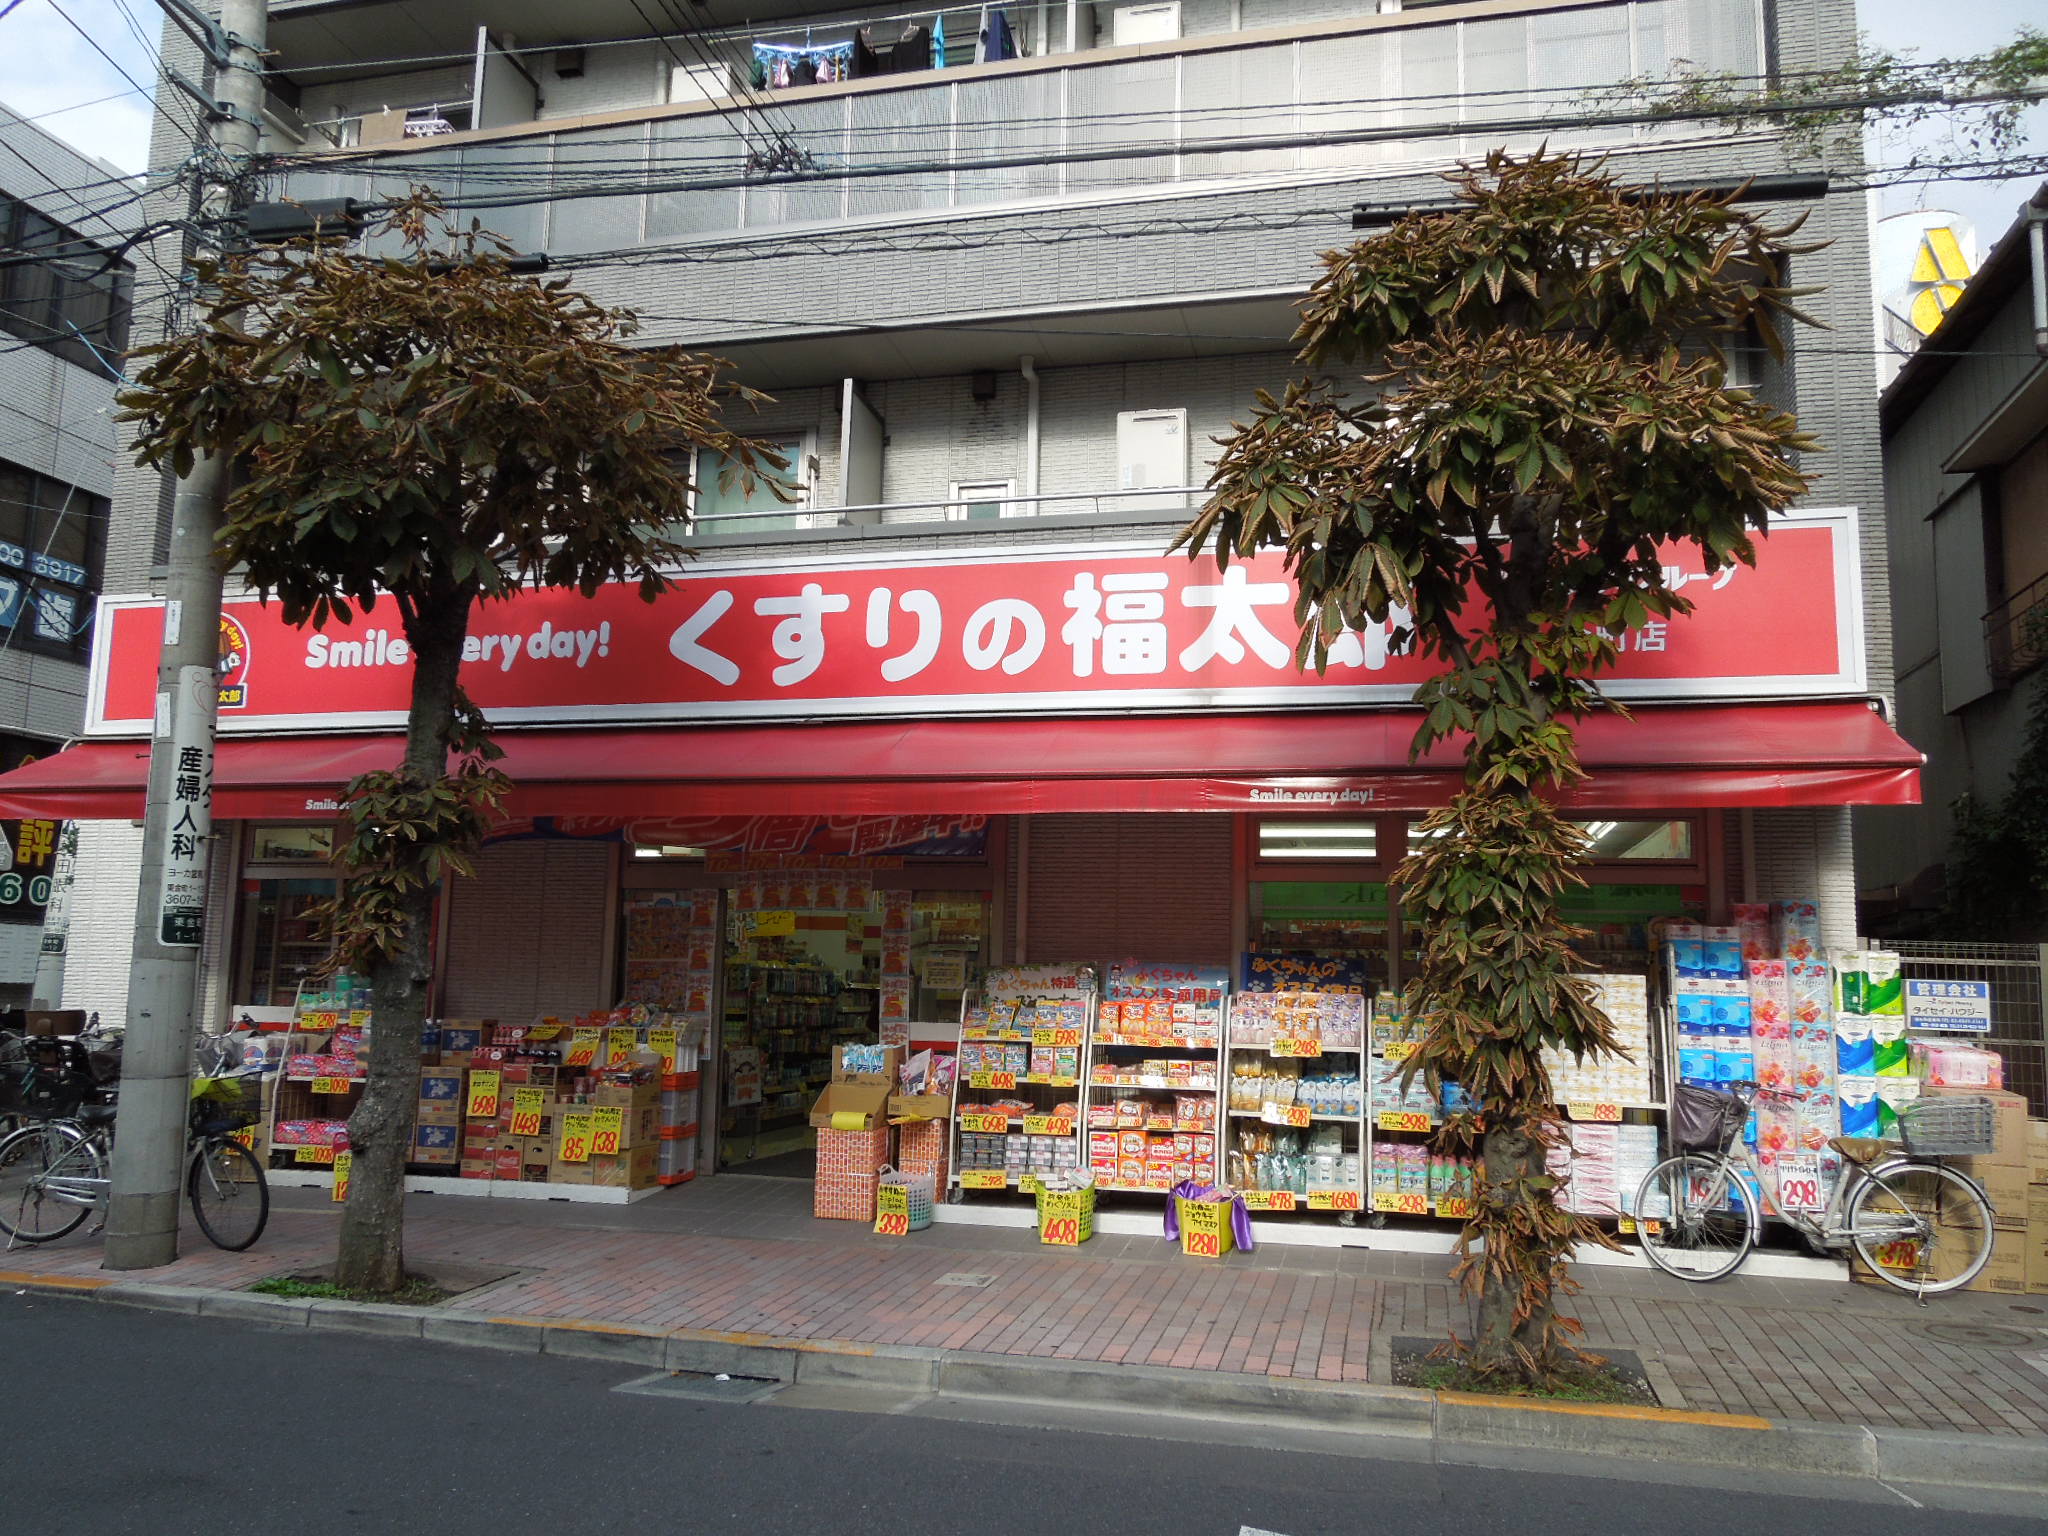 Dorakkusutoa. Medicine of Fukutaro Kanamachi shop 431m until (drugstore)